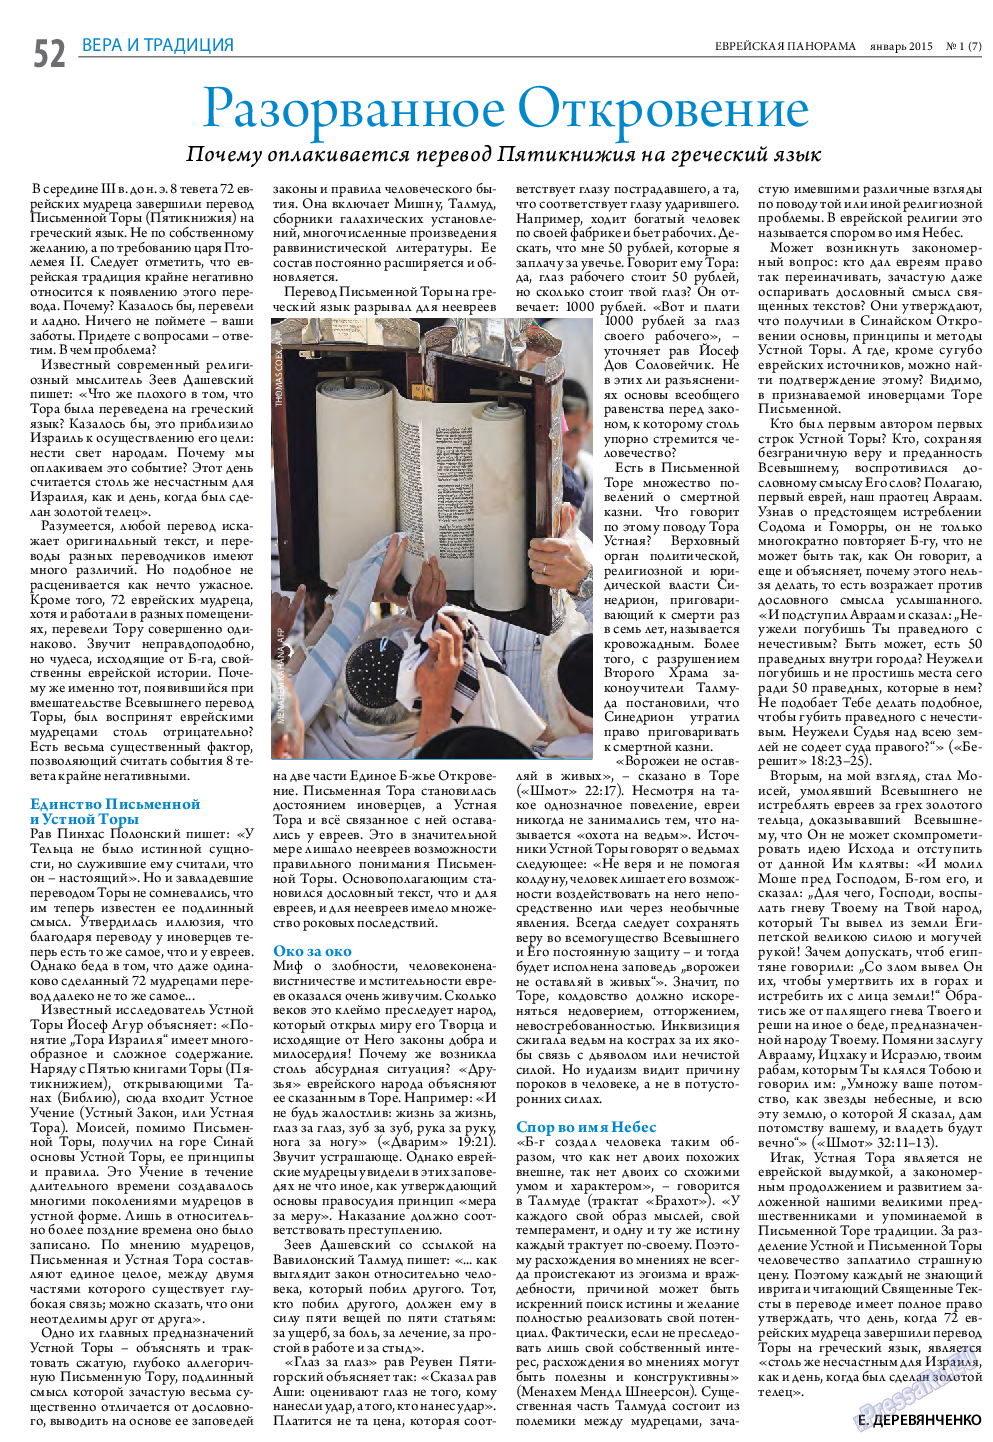 Еврейская панорама, газета. 2015 №1 стр.52